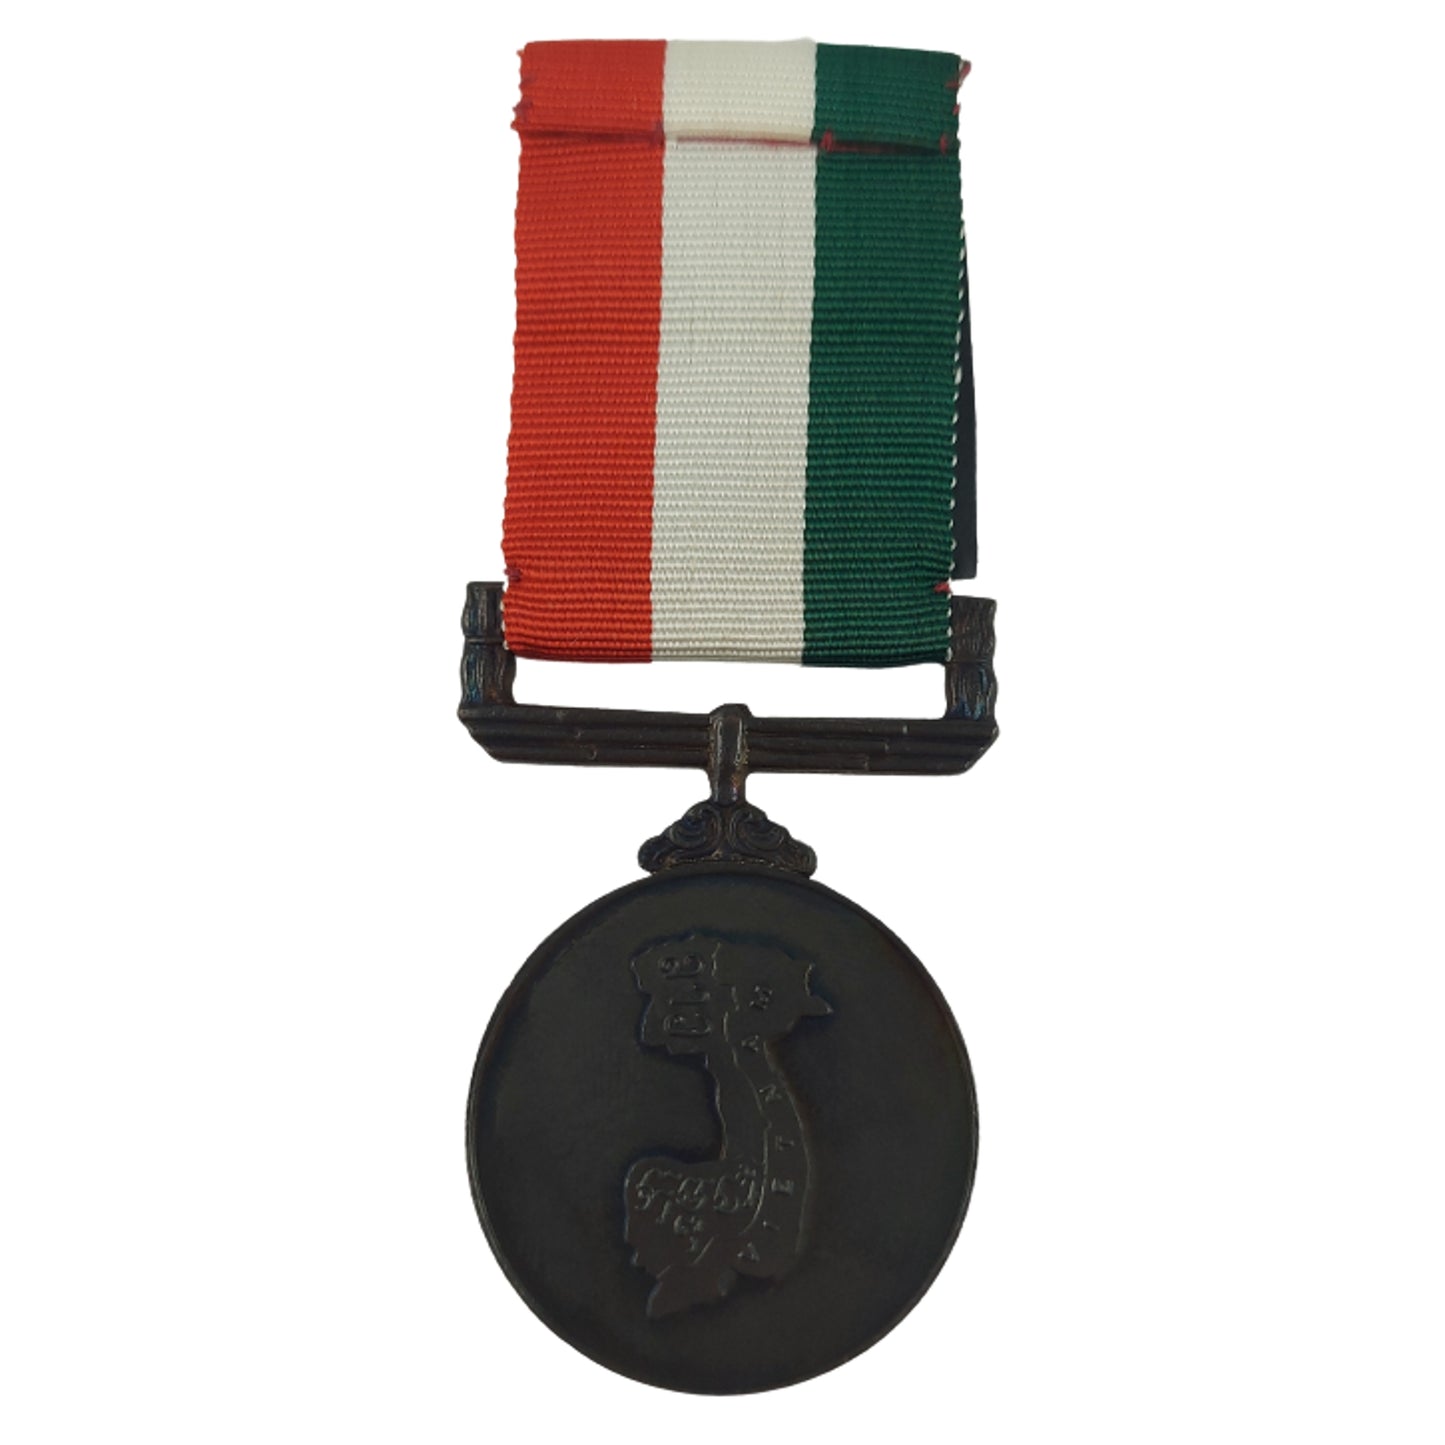 1967 Indo-China (Vietnam) ICSC Medal